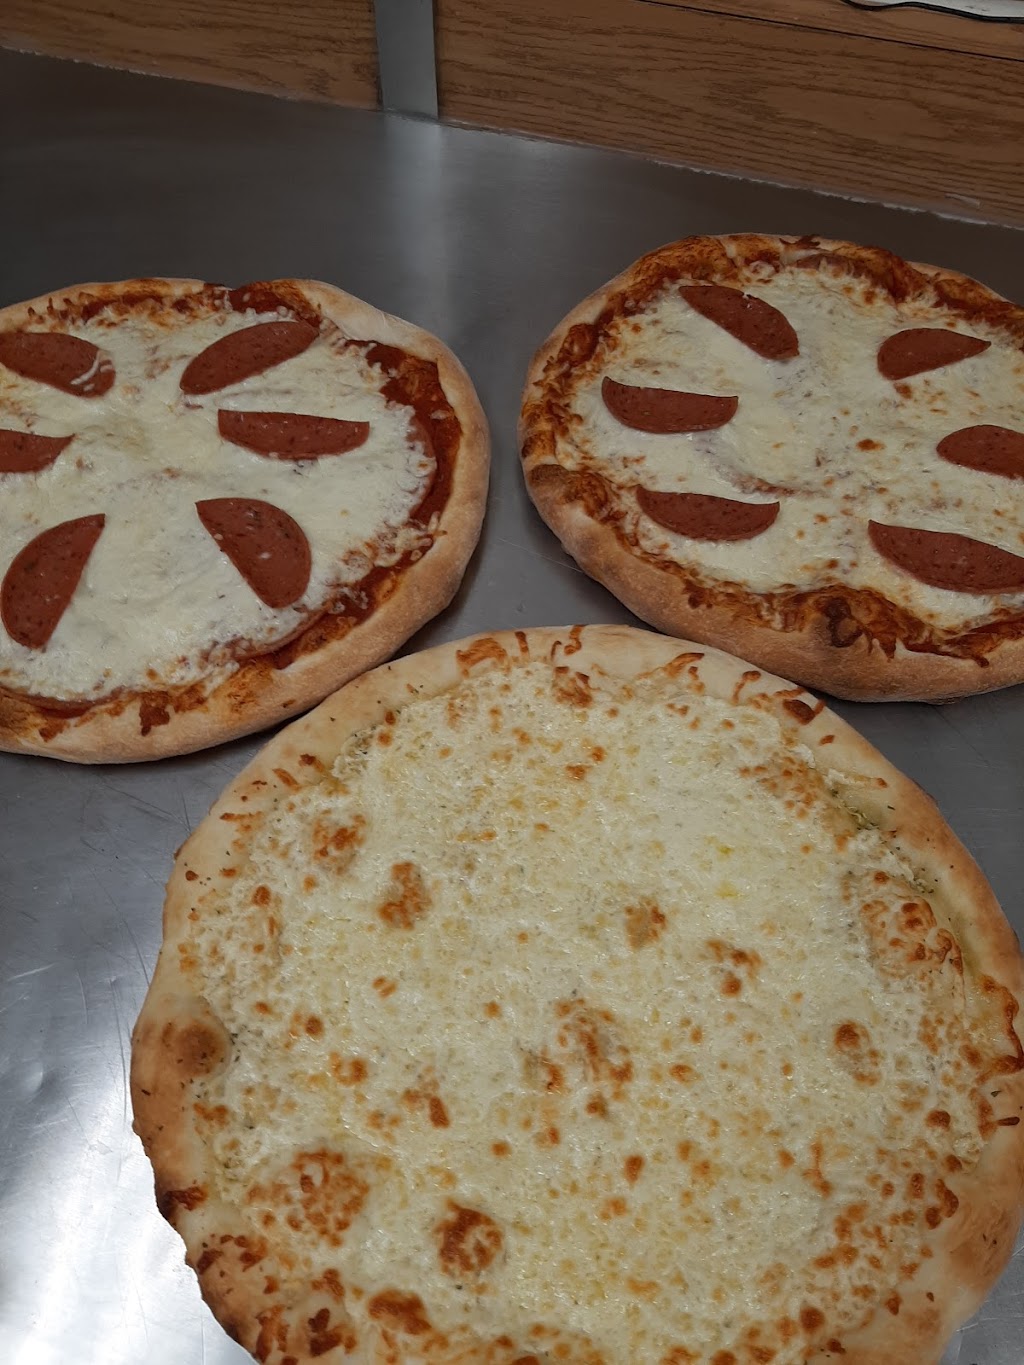 Sasys Pizza | 971 Cole Harbour Rd, Dartmouth, NS B2V 1E8, Canada | Phone: (902) 435-8777